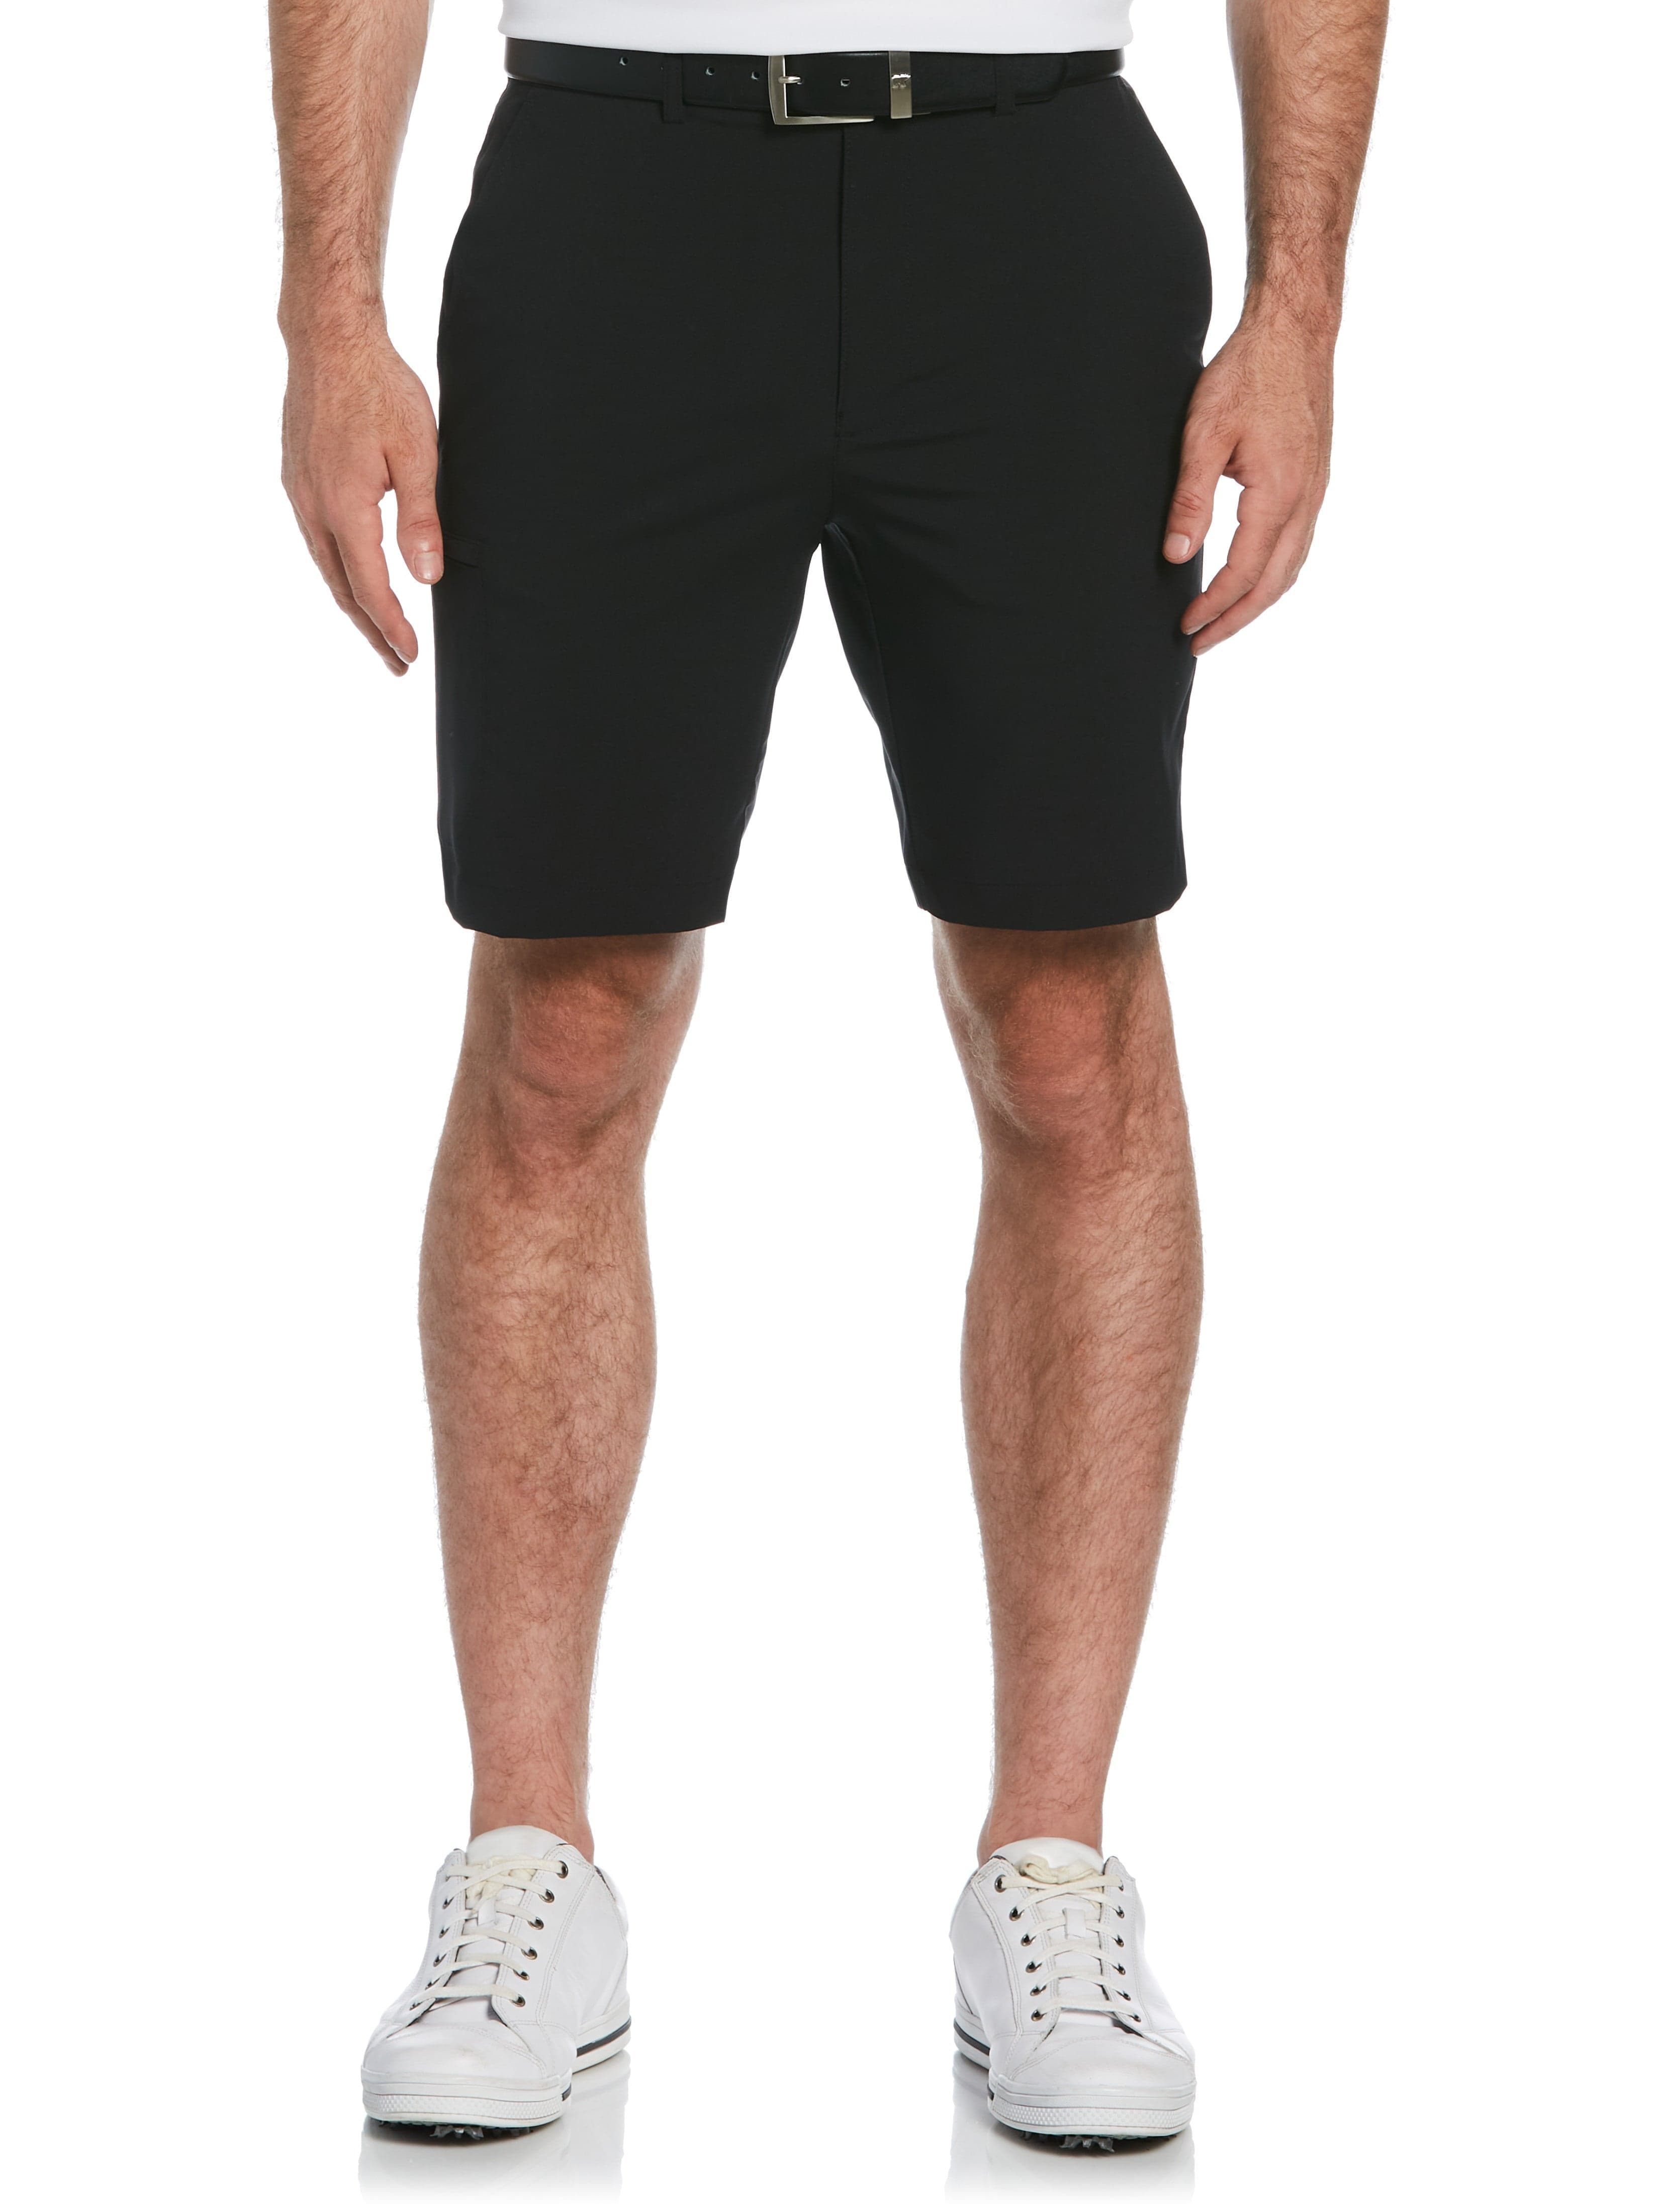 Jack Nicklaus Mens Flat Front Solid Golf Shorts w/ Cargo Pocket, Size 34, Black, 100% Polyester | Golf Apparel Shop